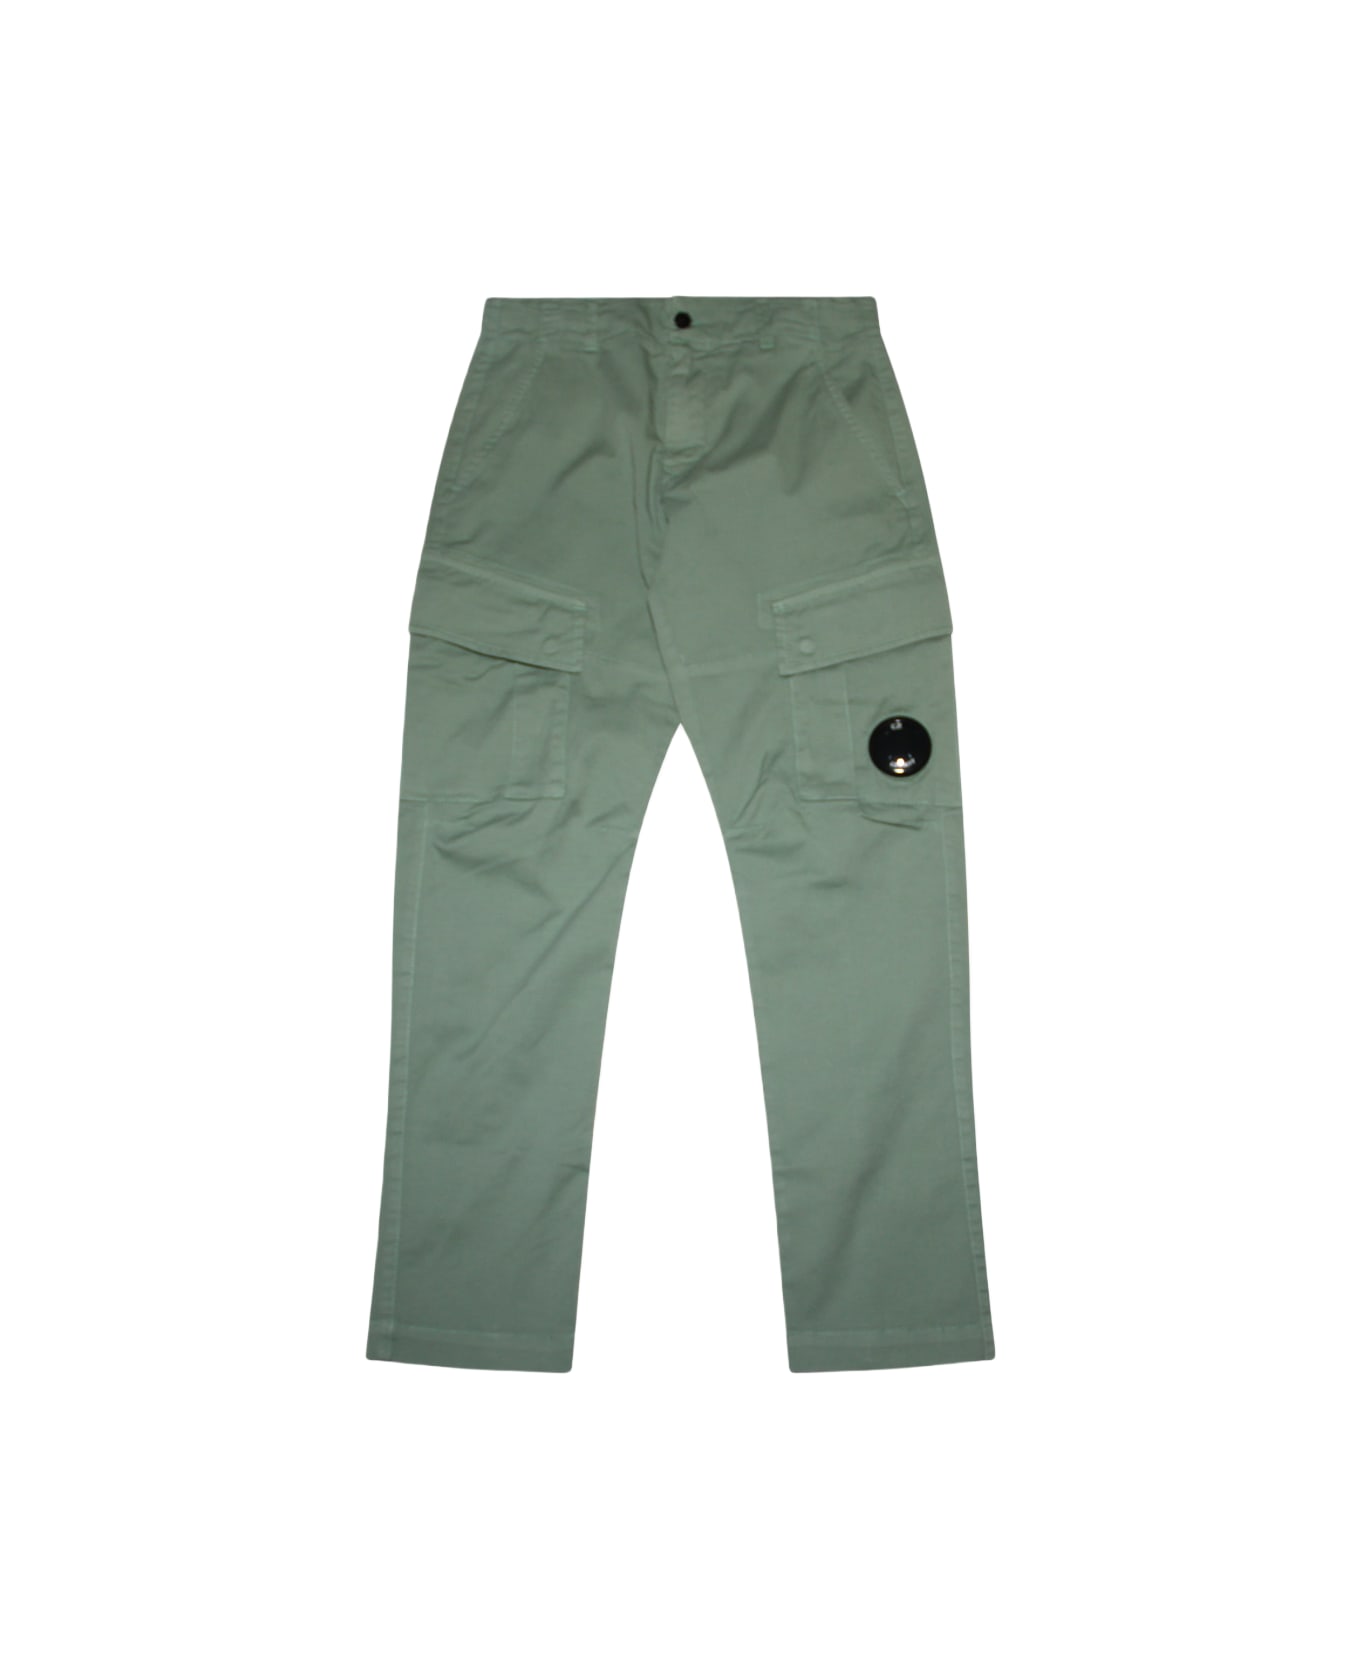 C.P. Company Green Cotton Pants - Green ボトムス